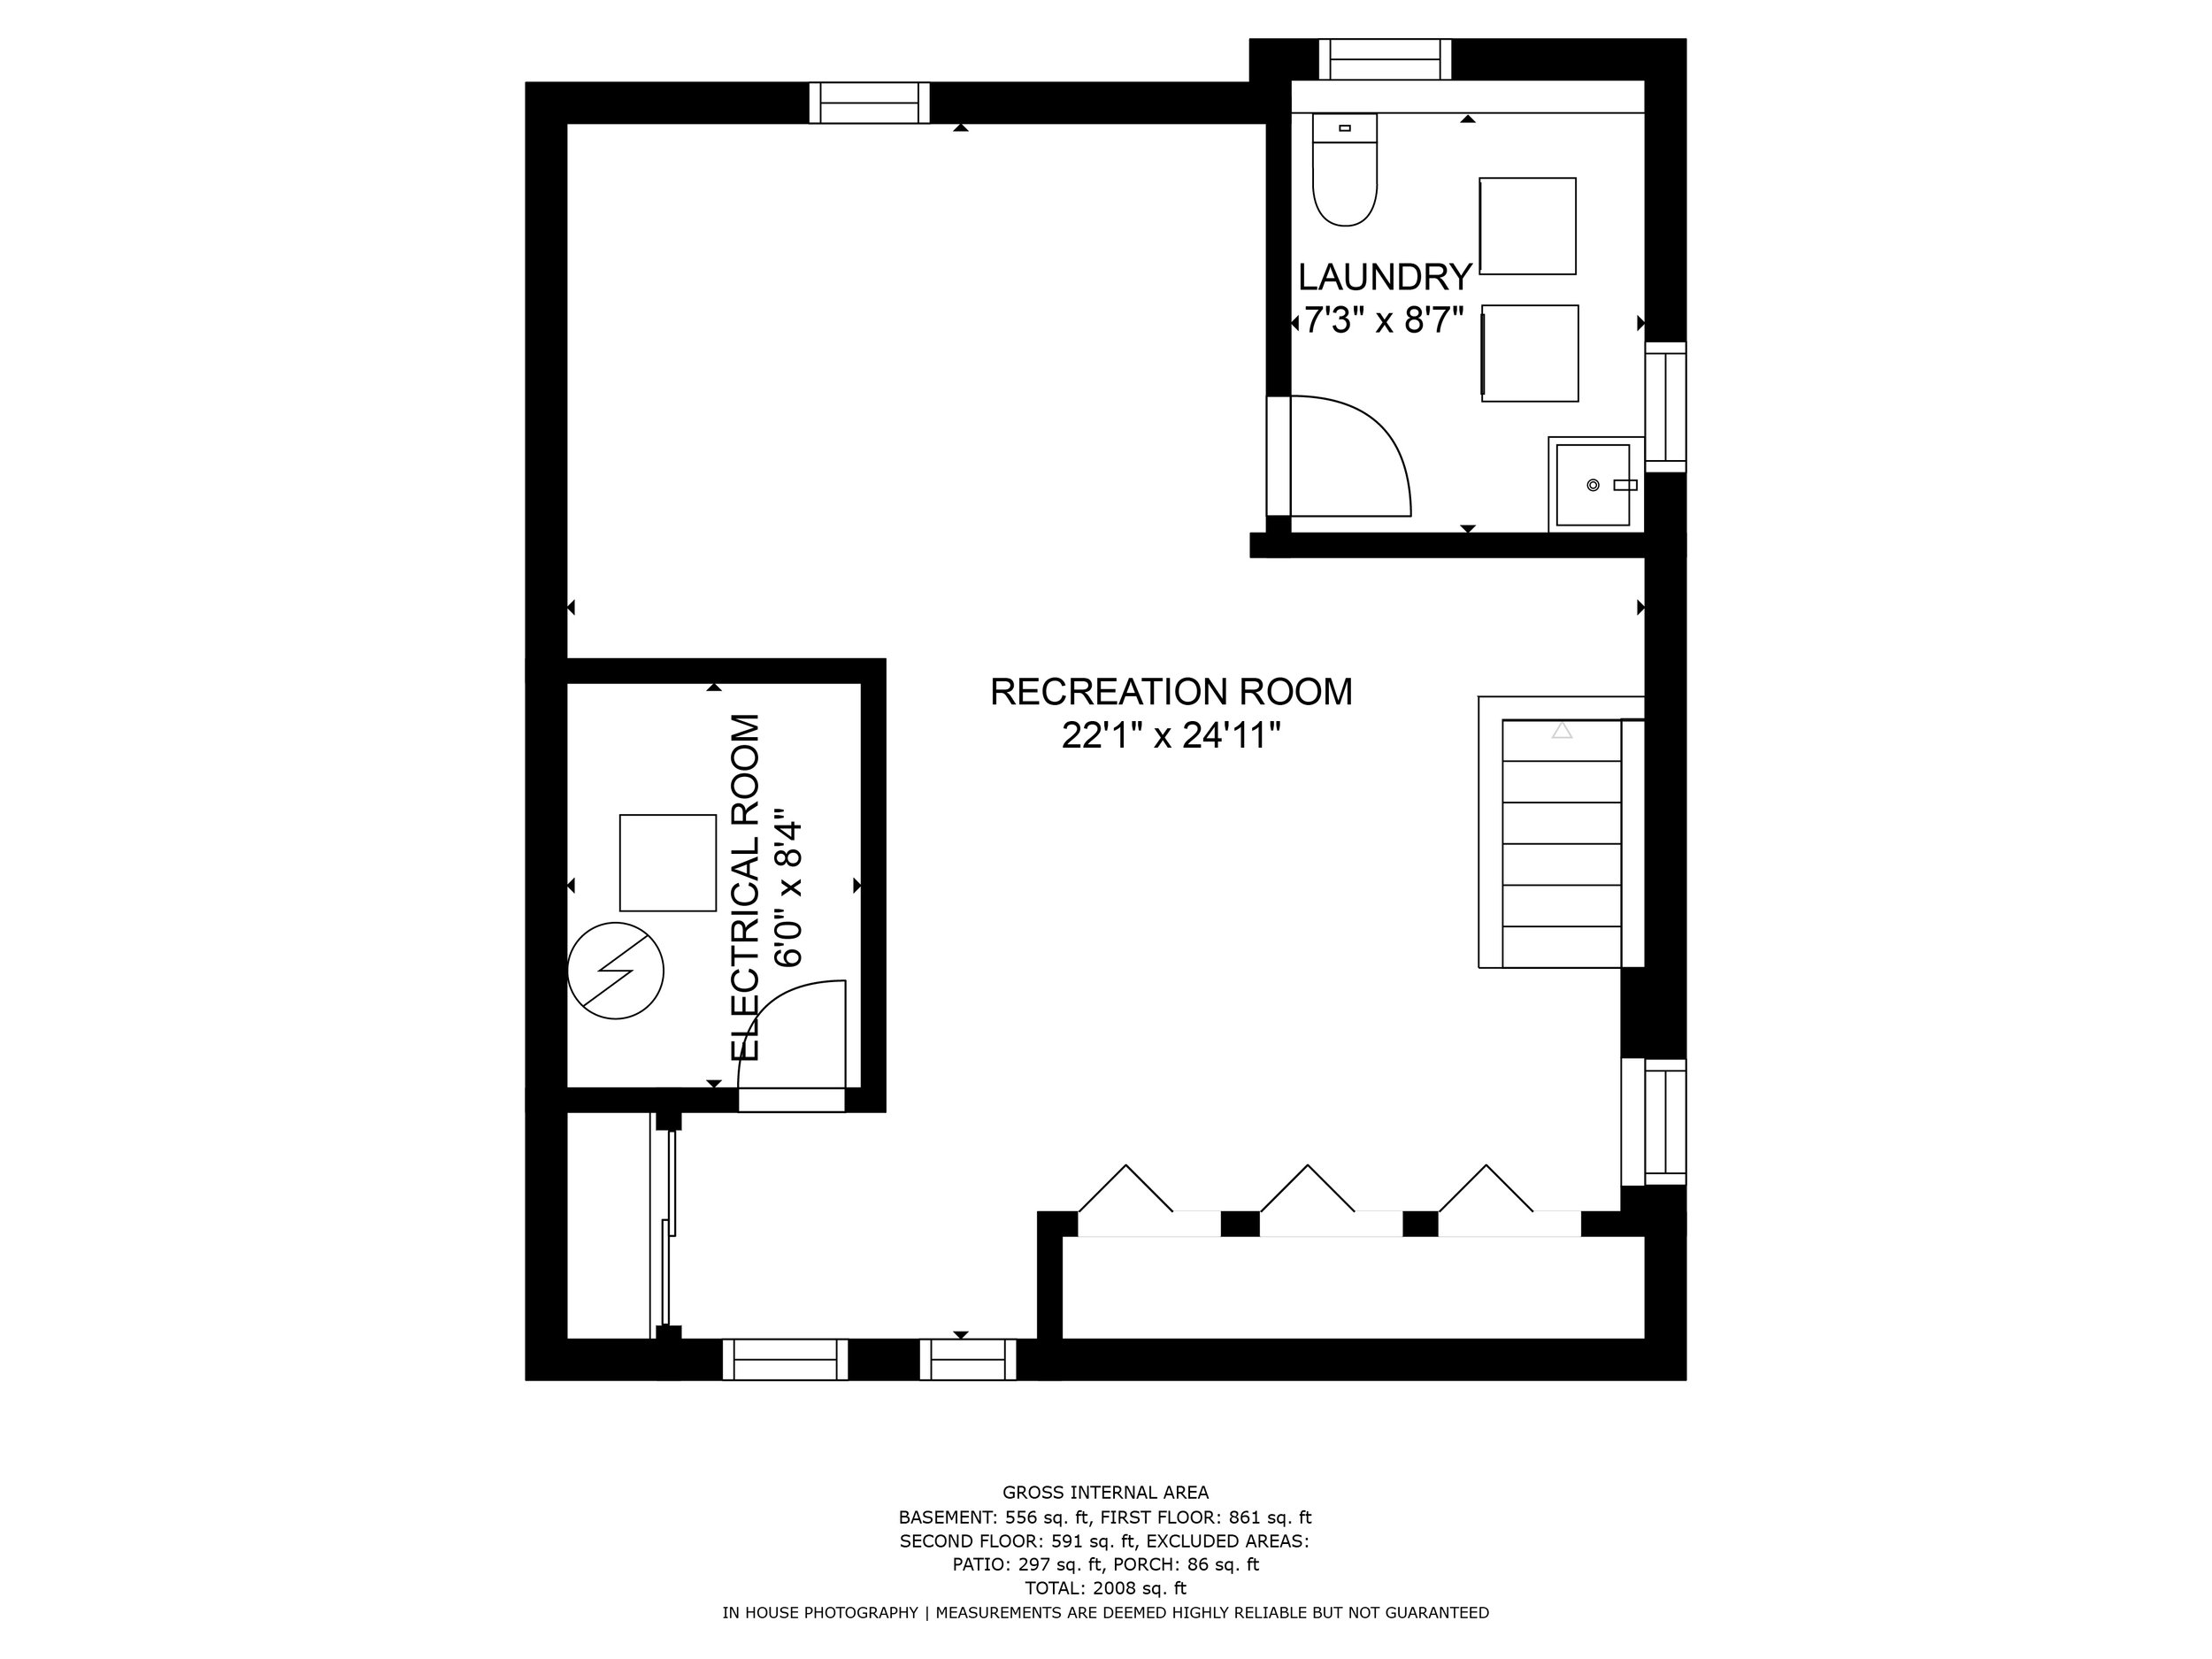 2-333 Meadowbrook floor plan basement.jpg